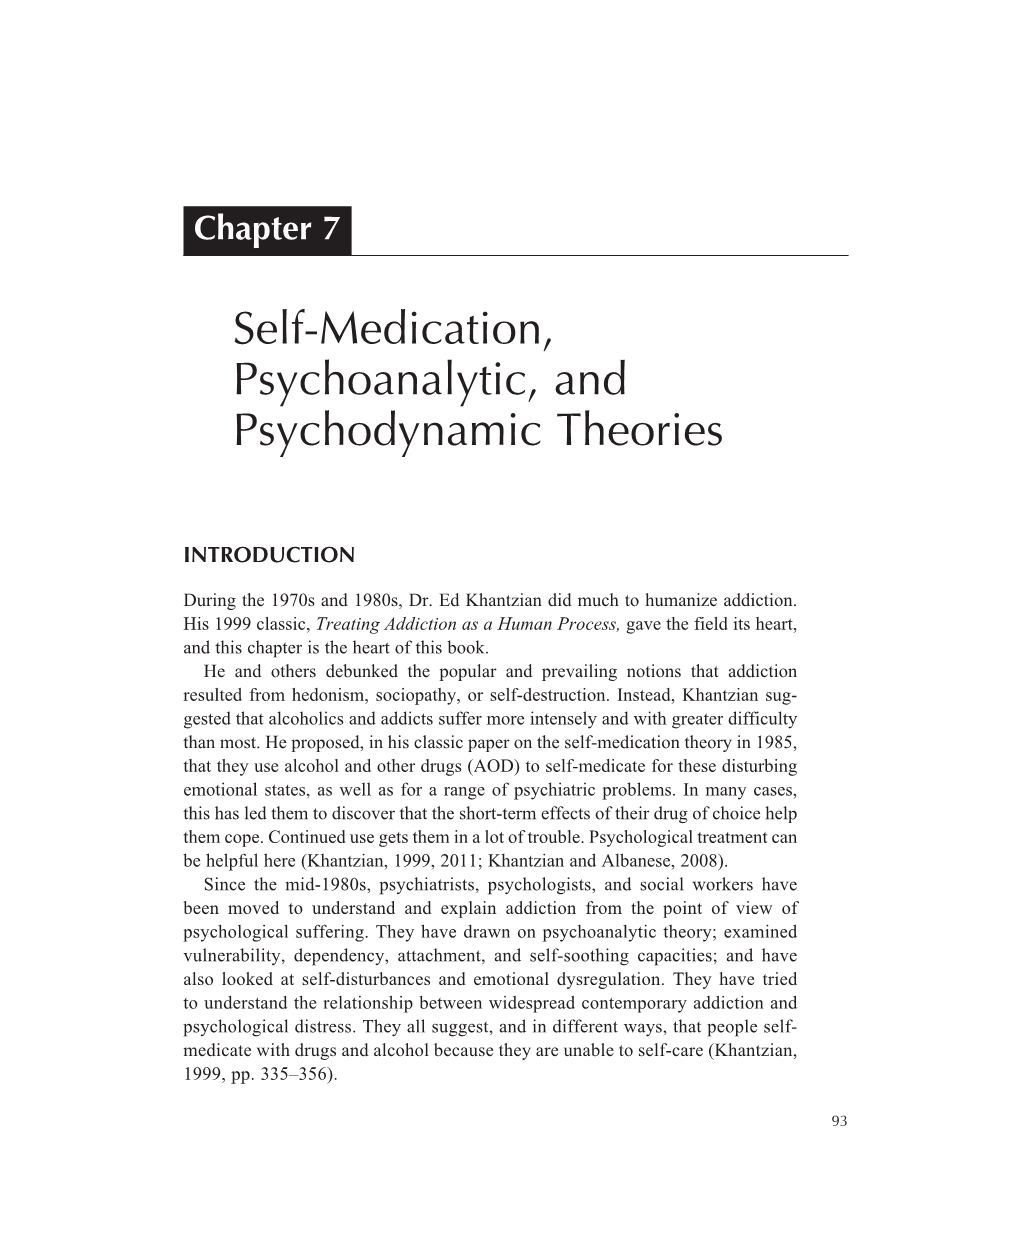 Self-Medication, Psychoanalytic, and Psychodynamic Theories